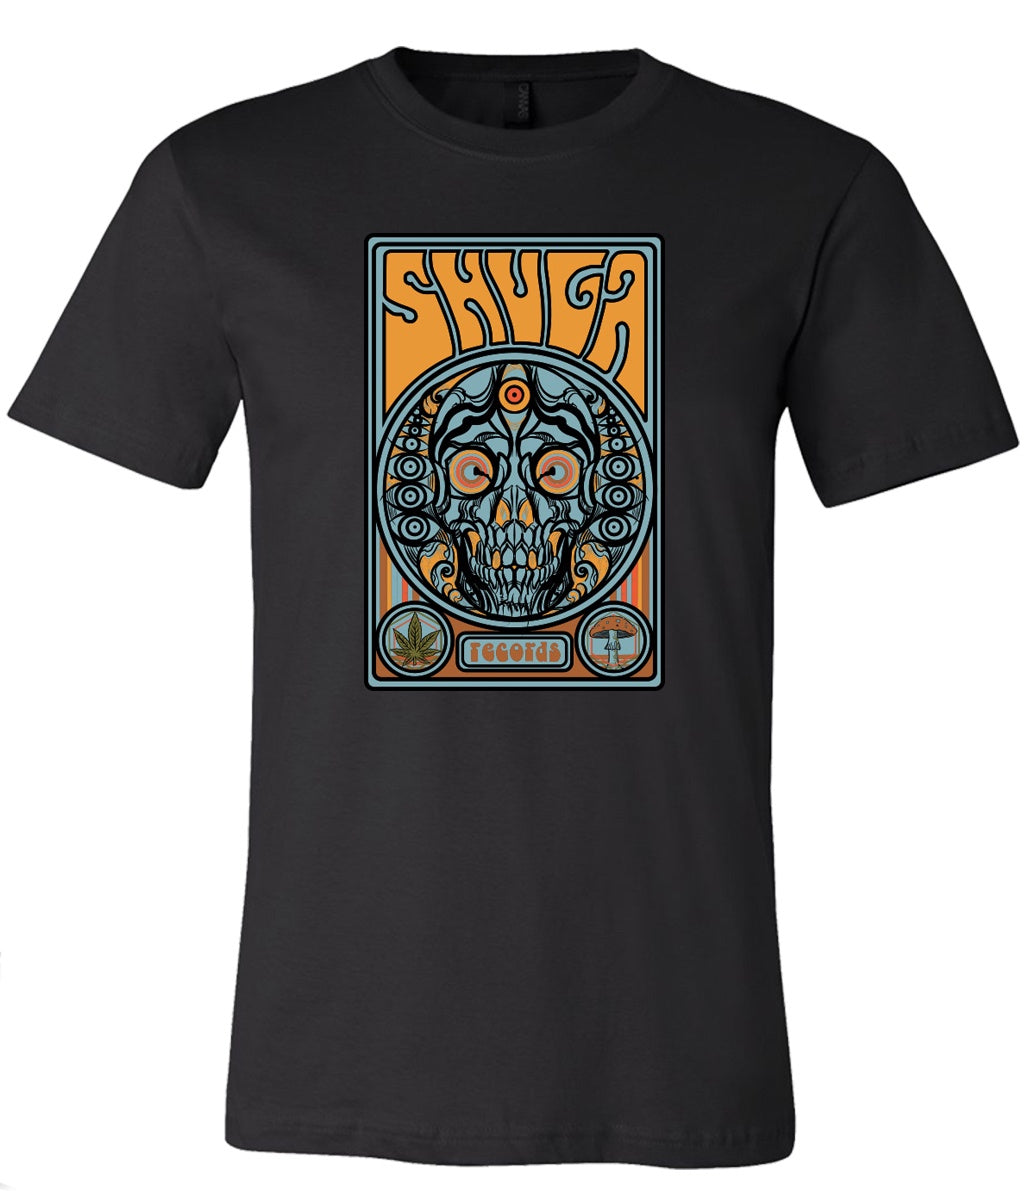 Shuga Records 'Trippy Skull' Design Black T-Shirts